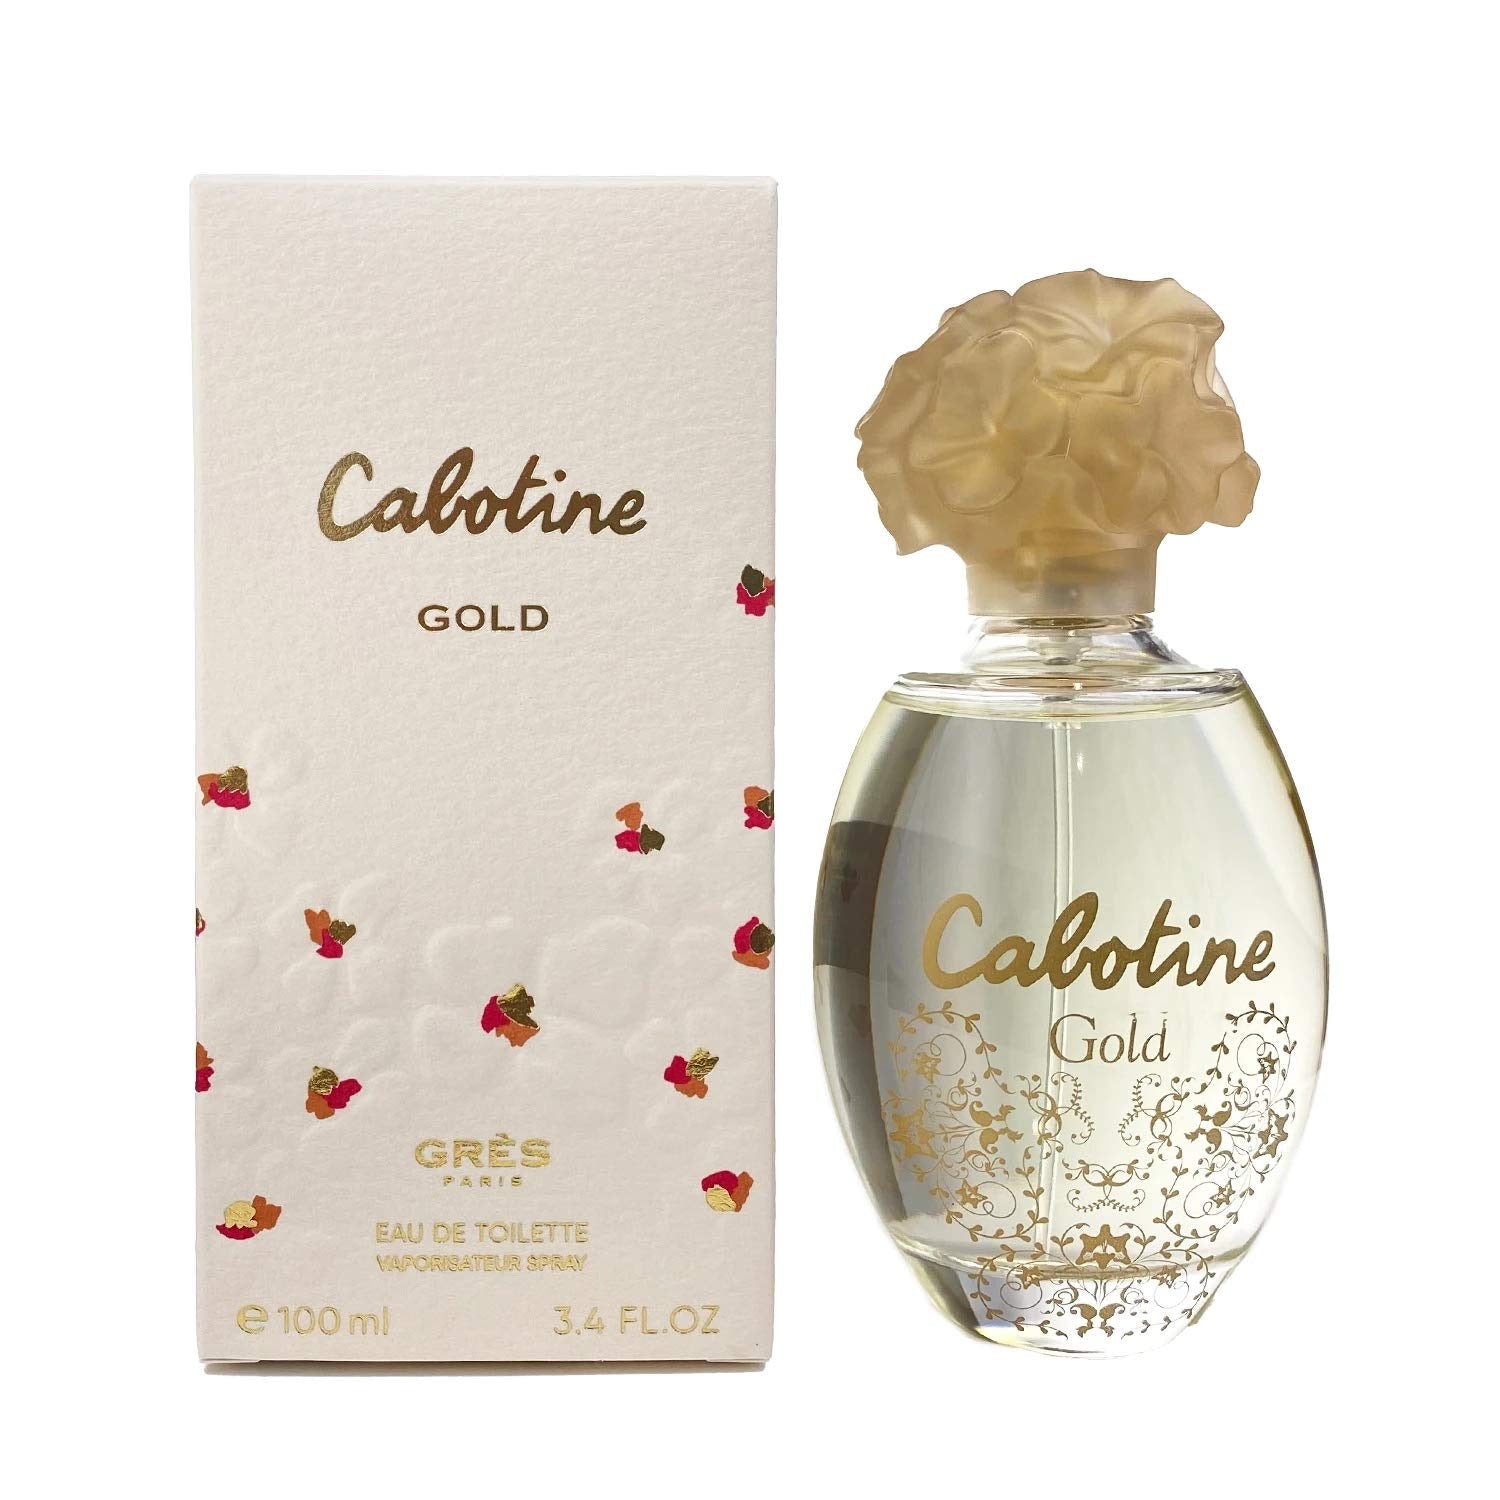 Perfume - Cabotine Gold 3.4 OZ